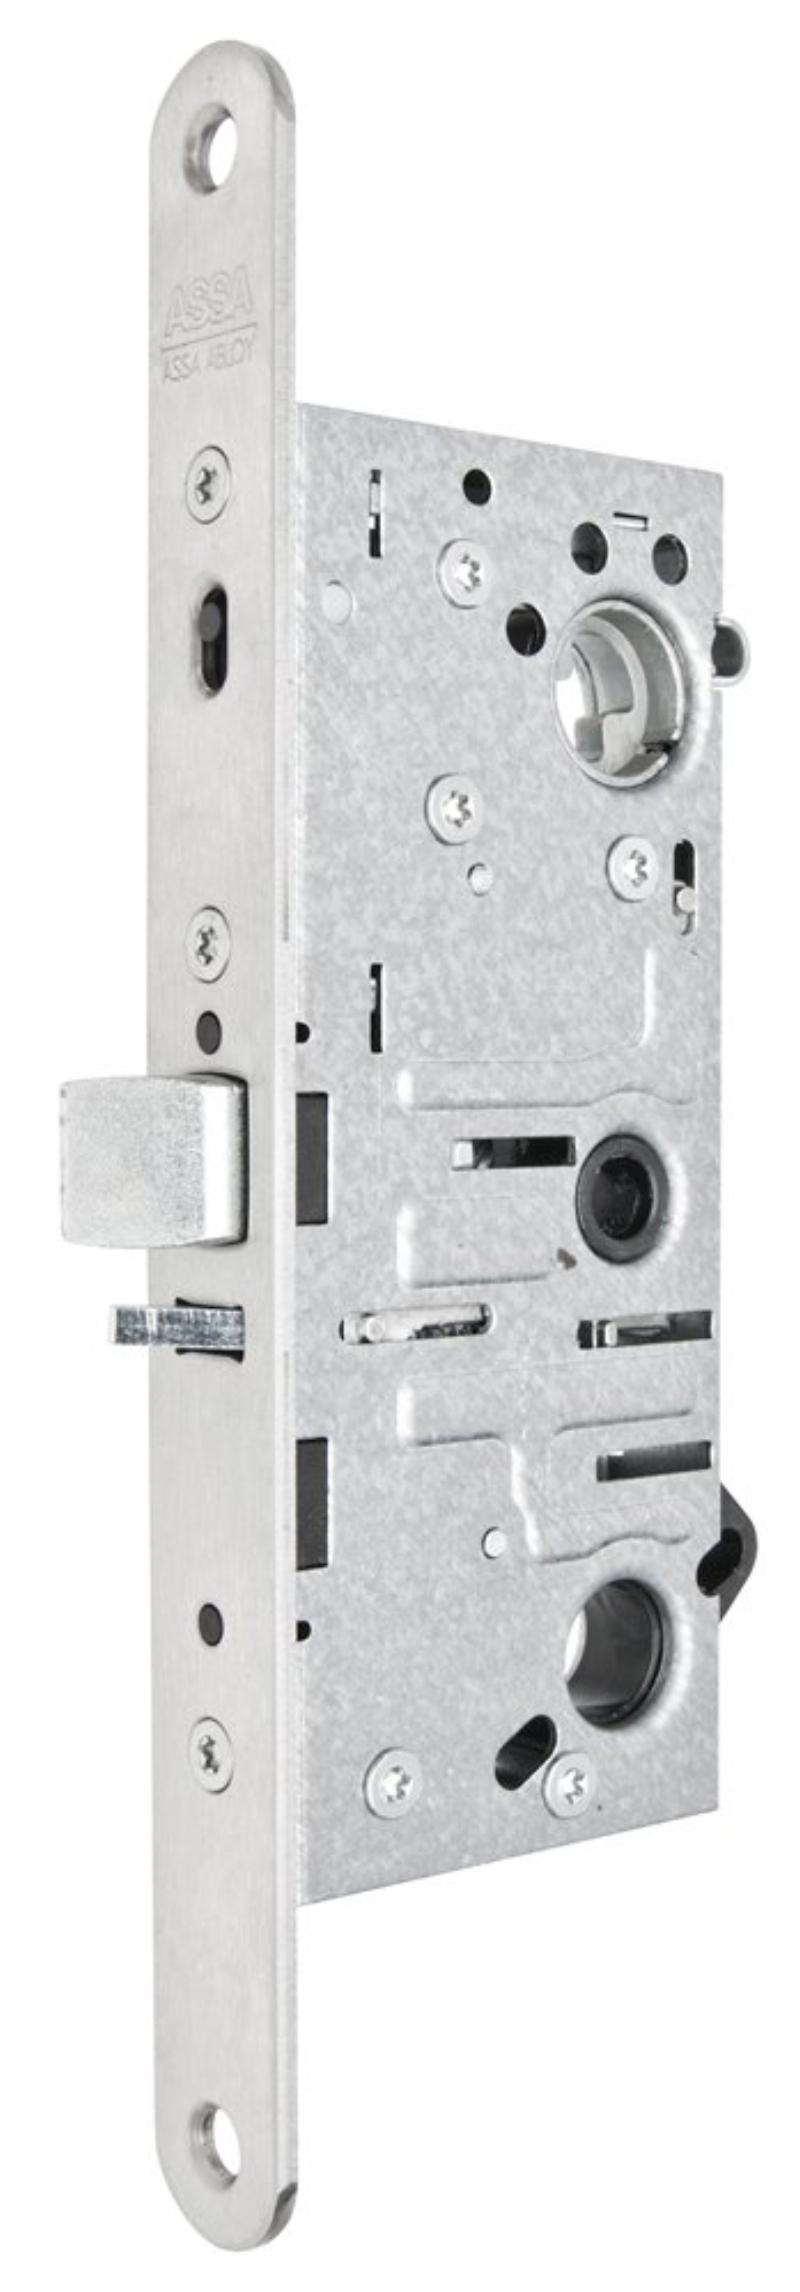 Lock box 230-50 V reversible